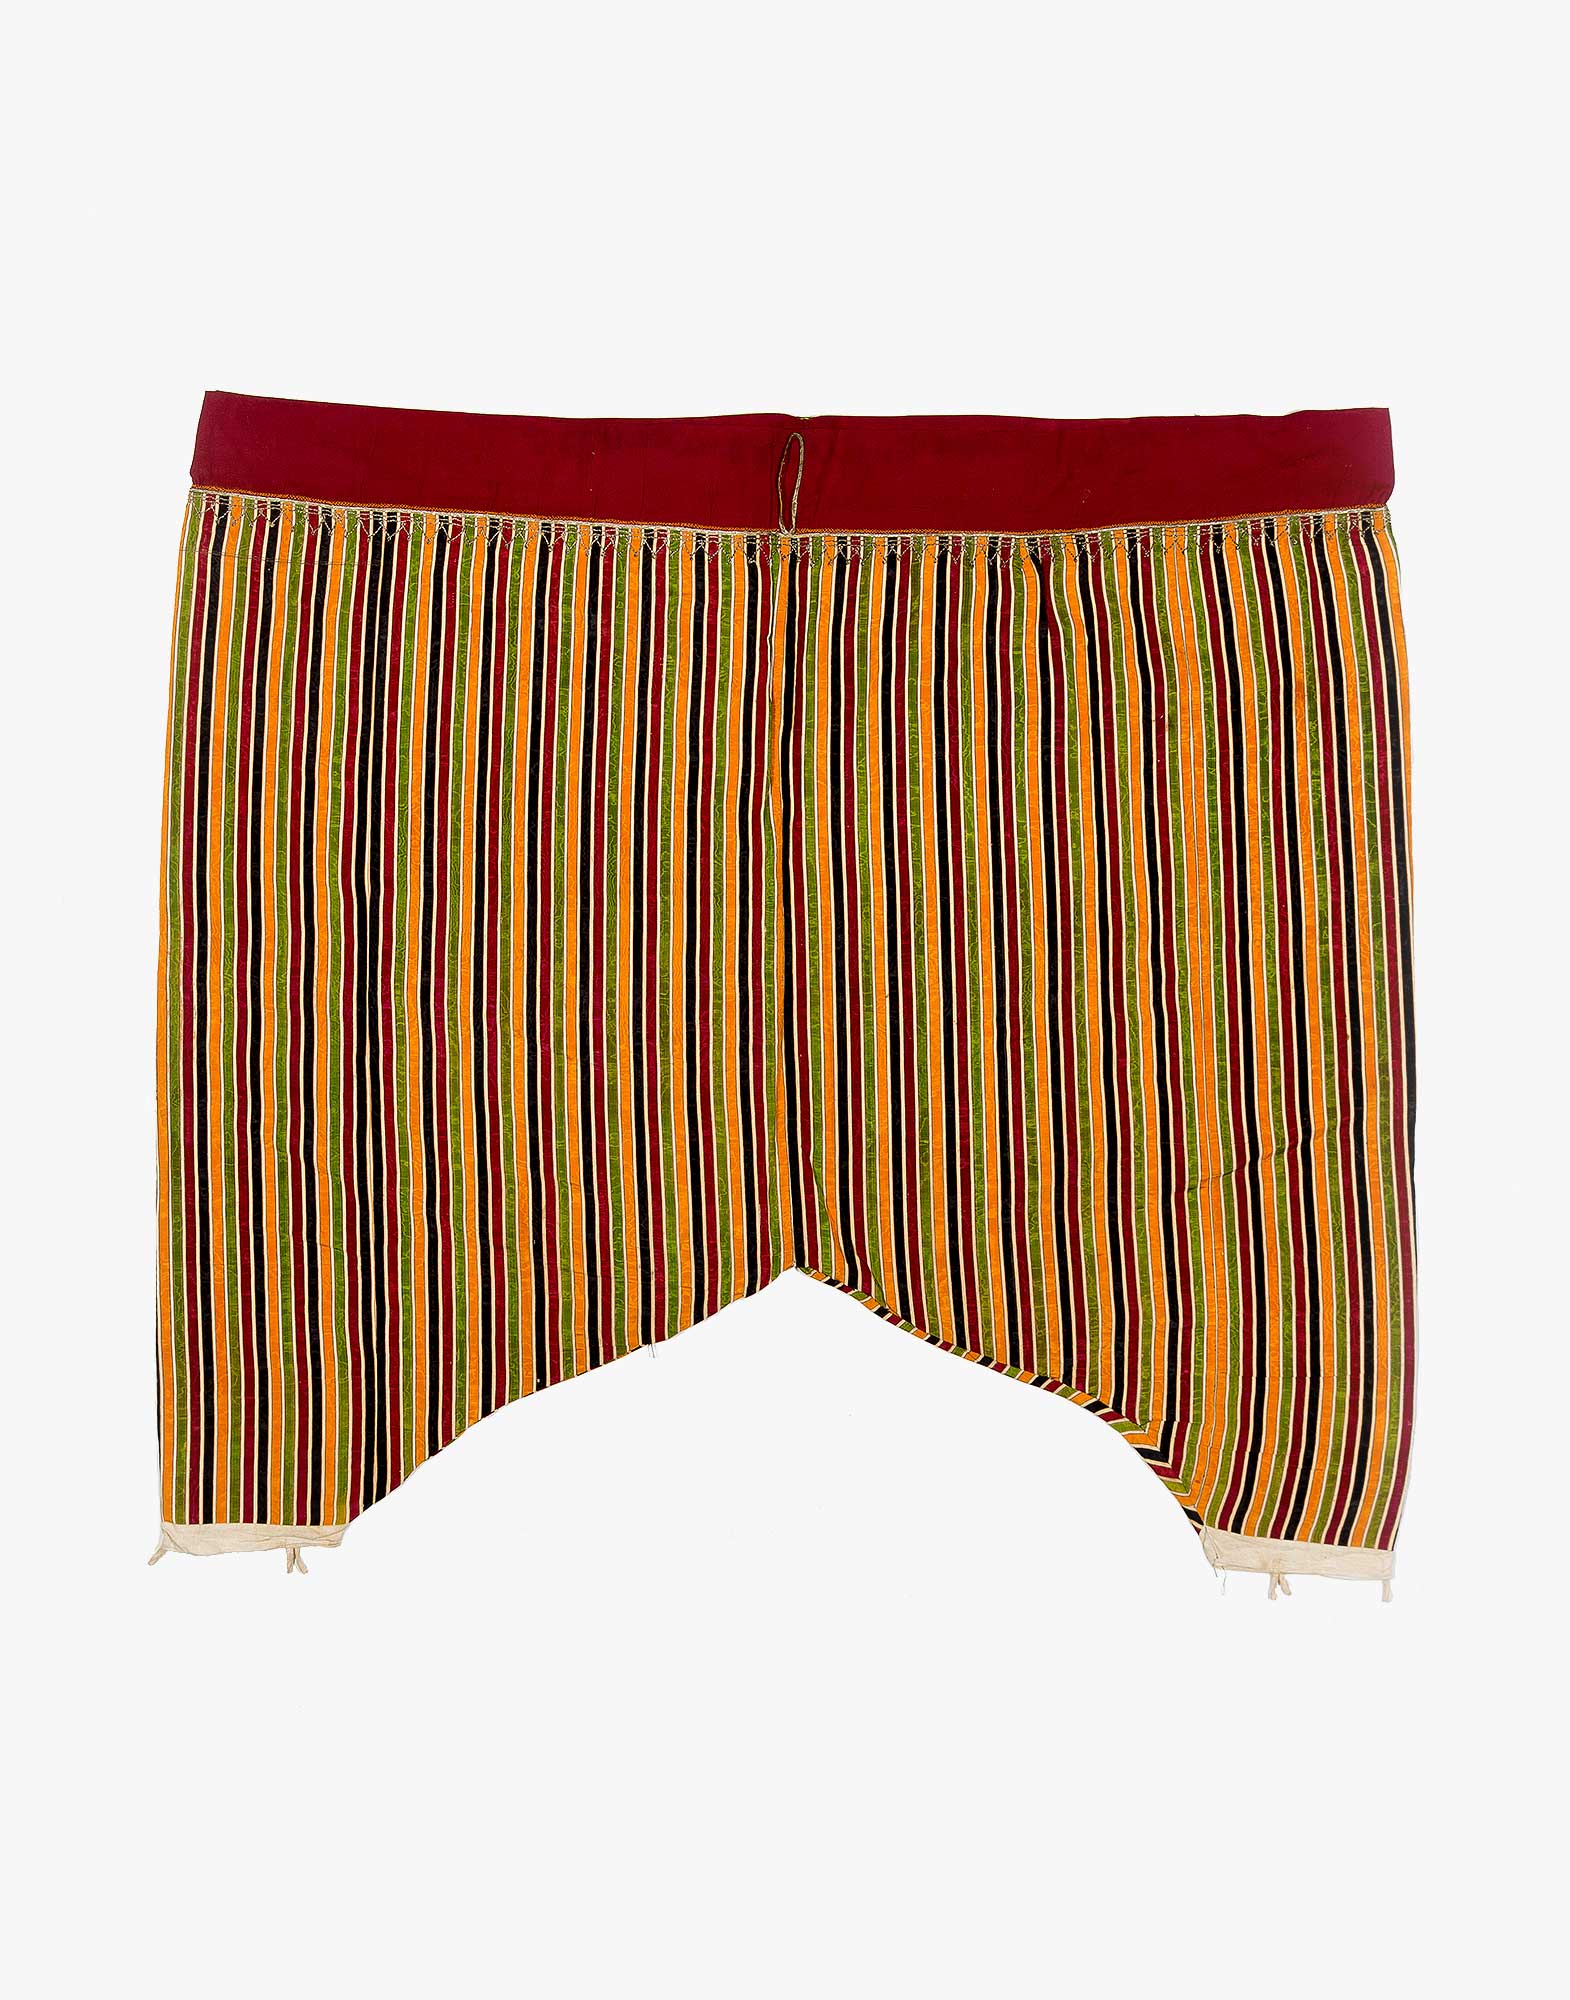 North West Anatolian Silk Ottoman Era Baggy Pants Shalwar